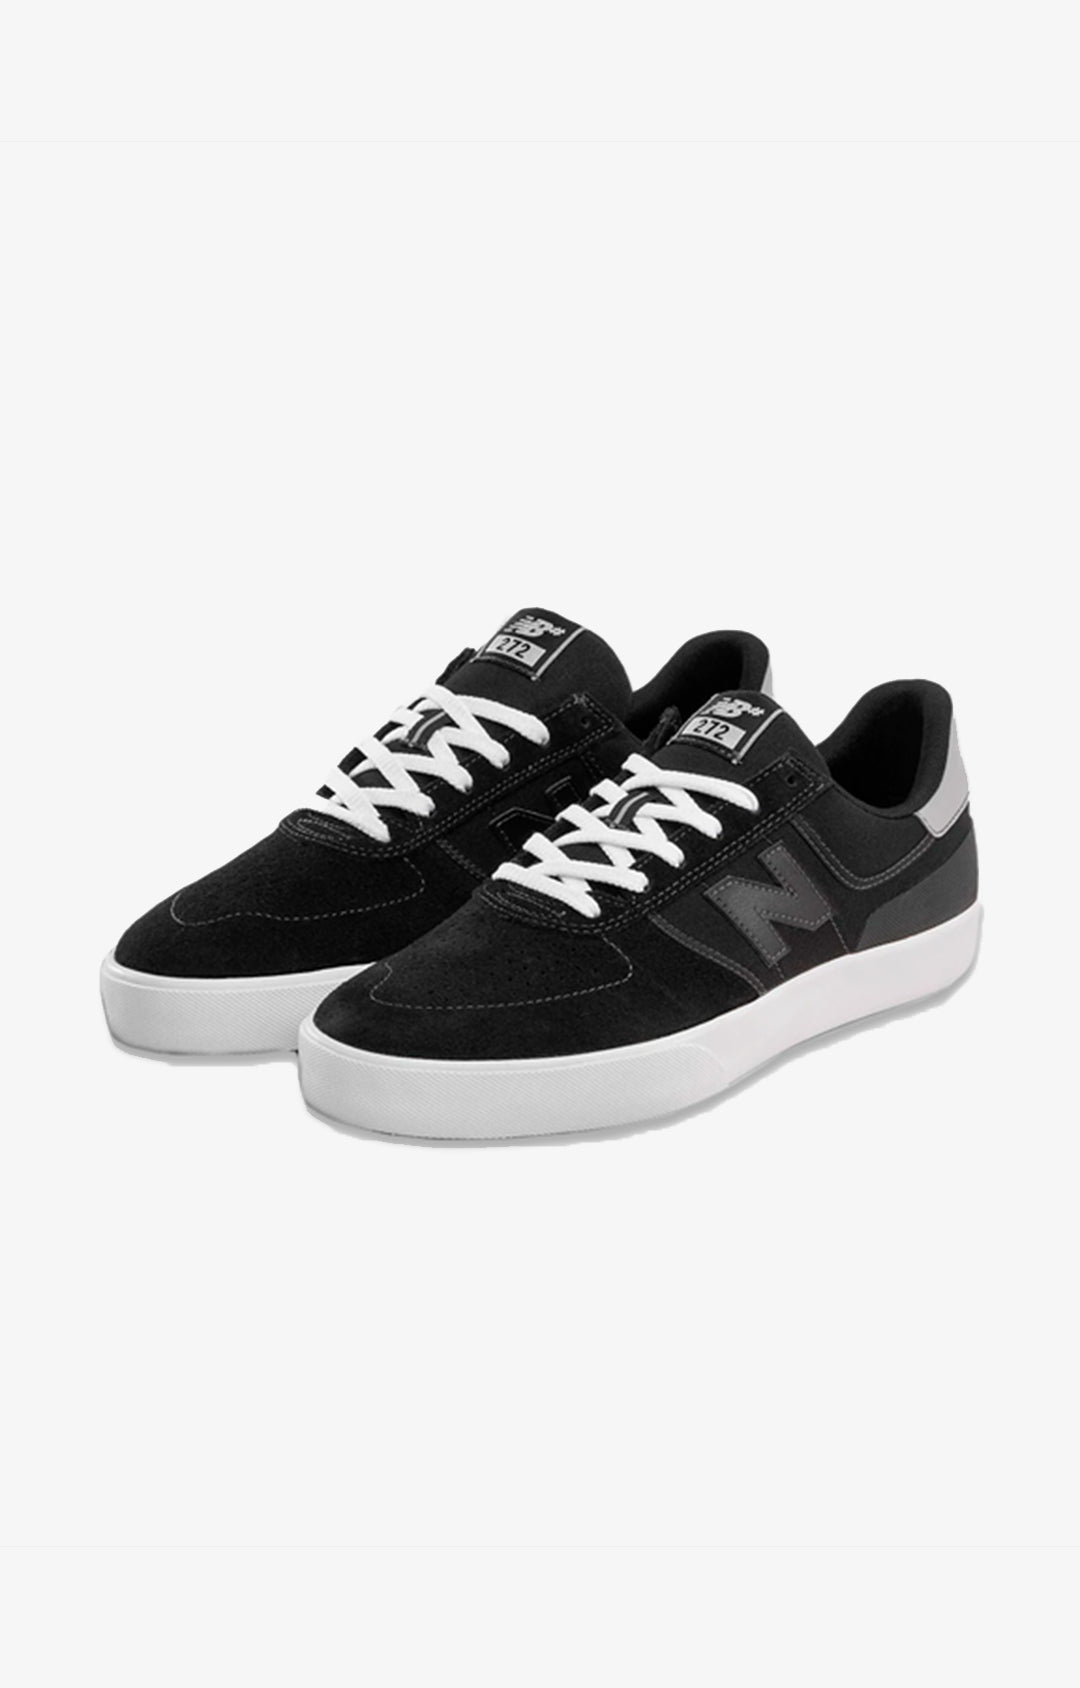 New Balance Numeric NM272V1 Shoe, Black/White